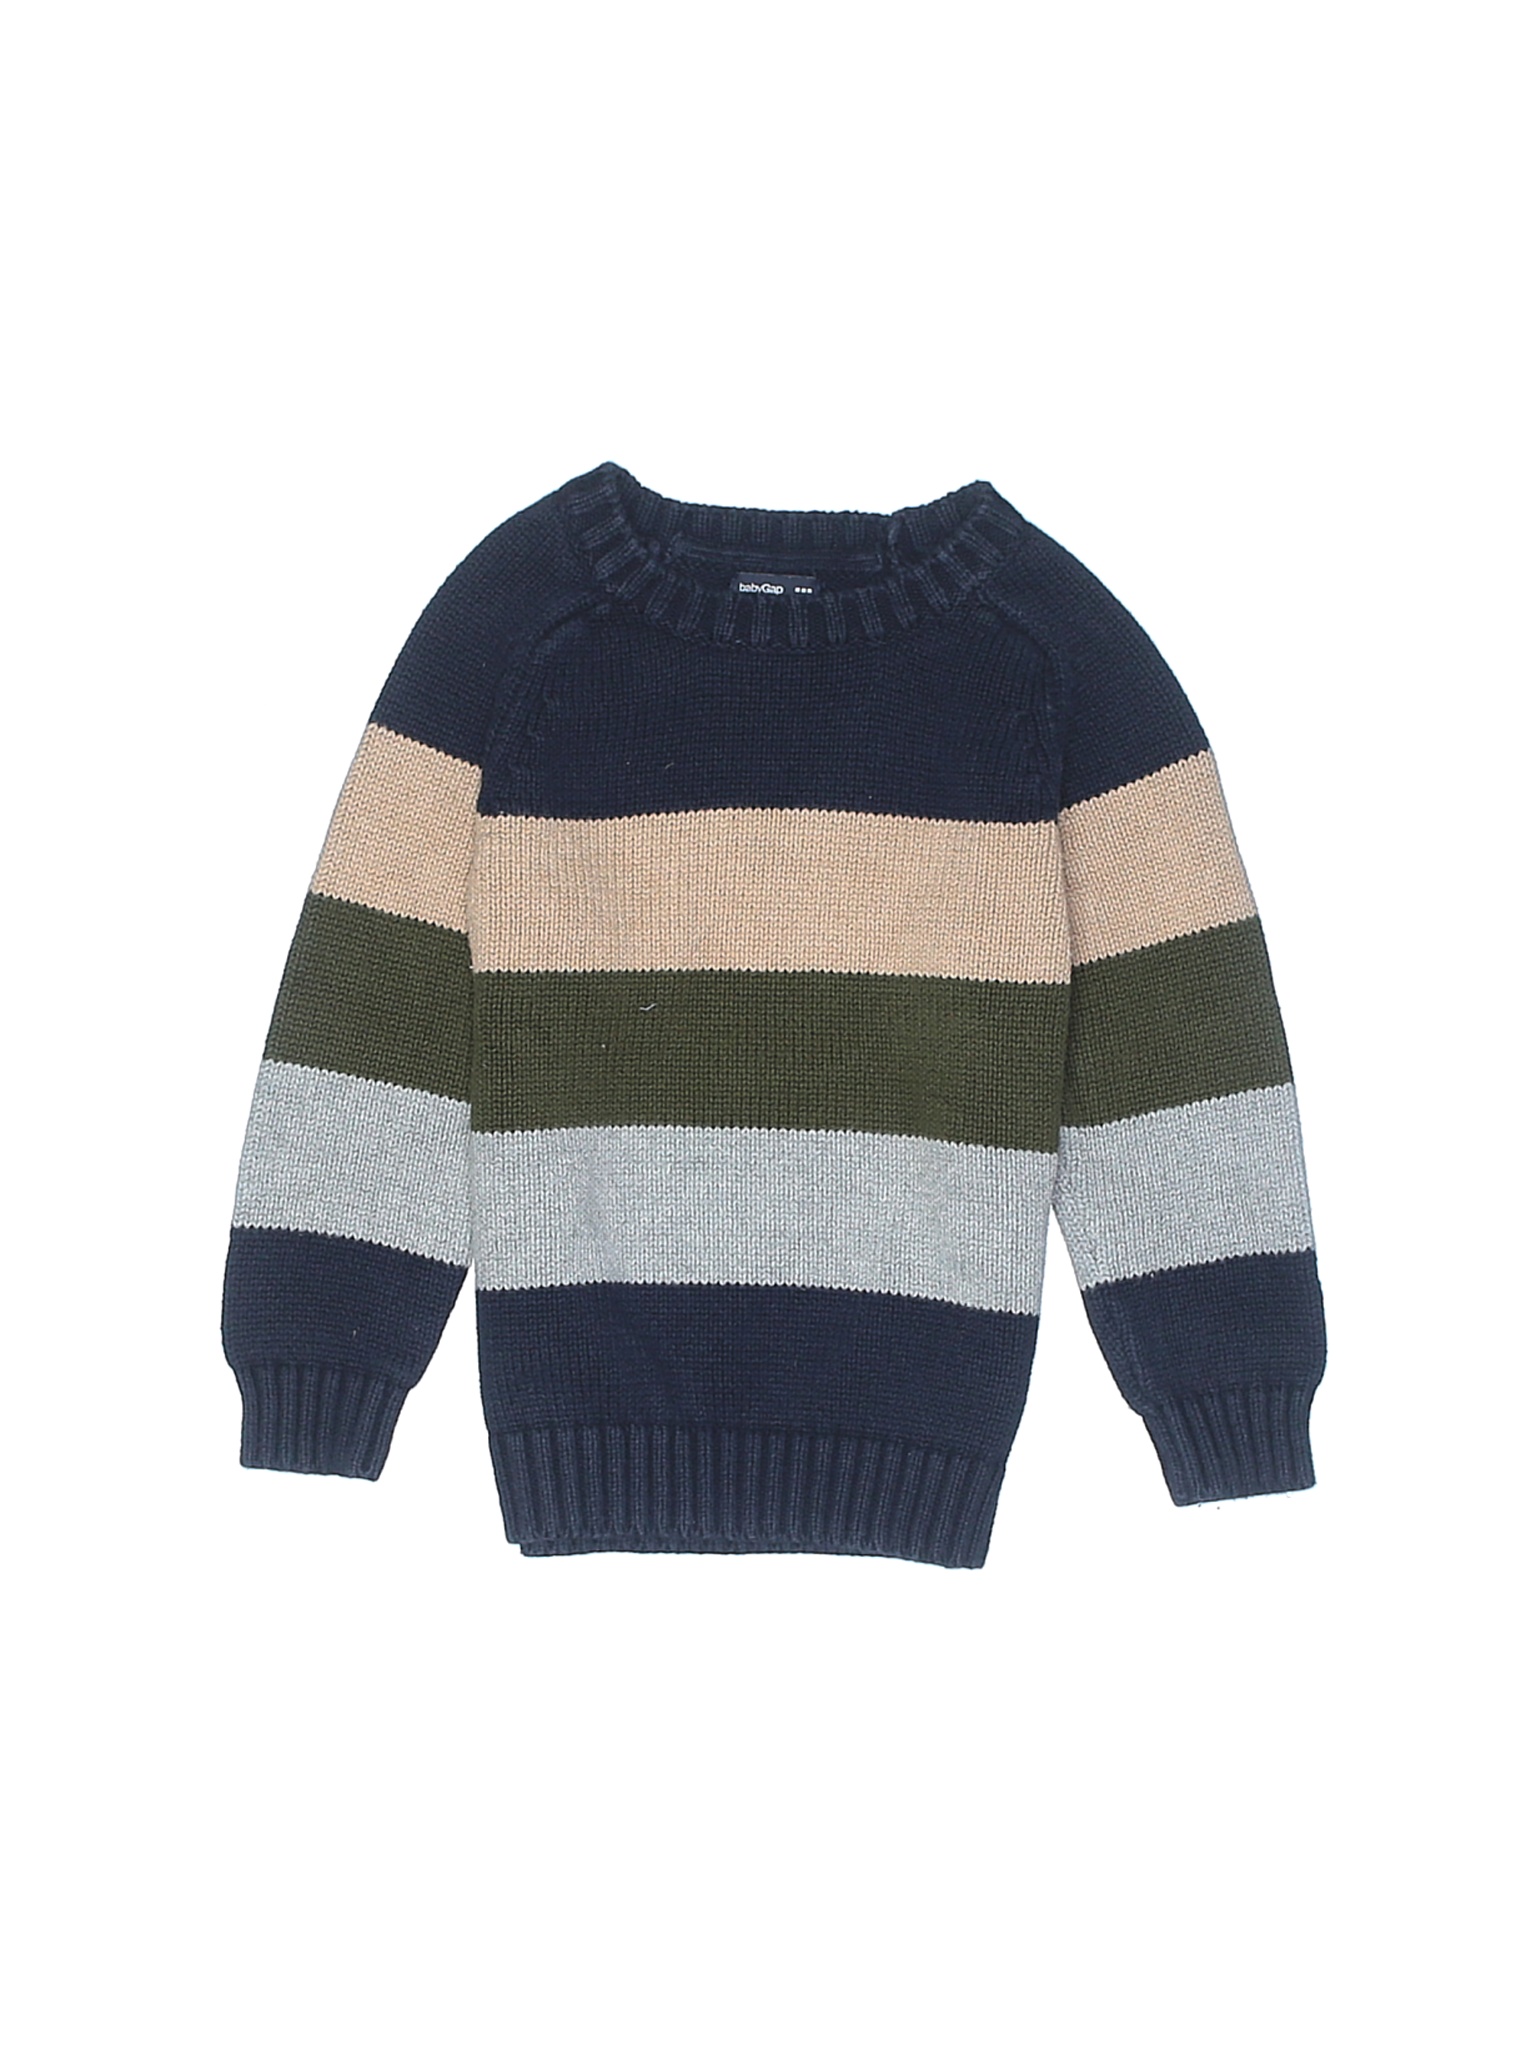 Baby Gap Boys Blue Pullover Sweater 2T | eBay